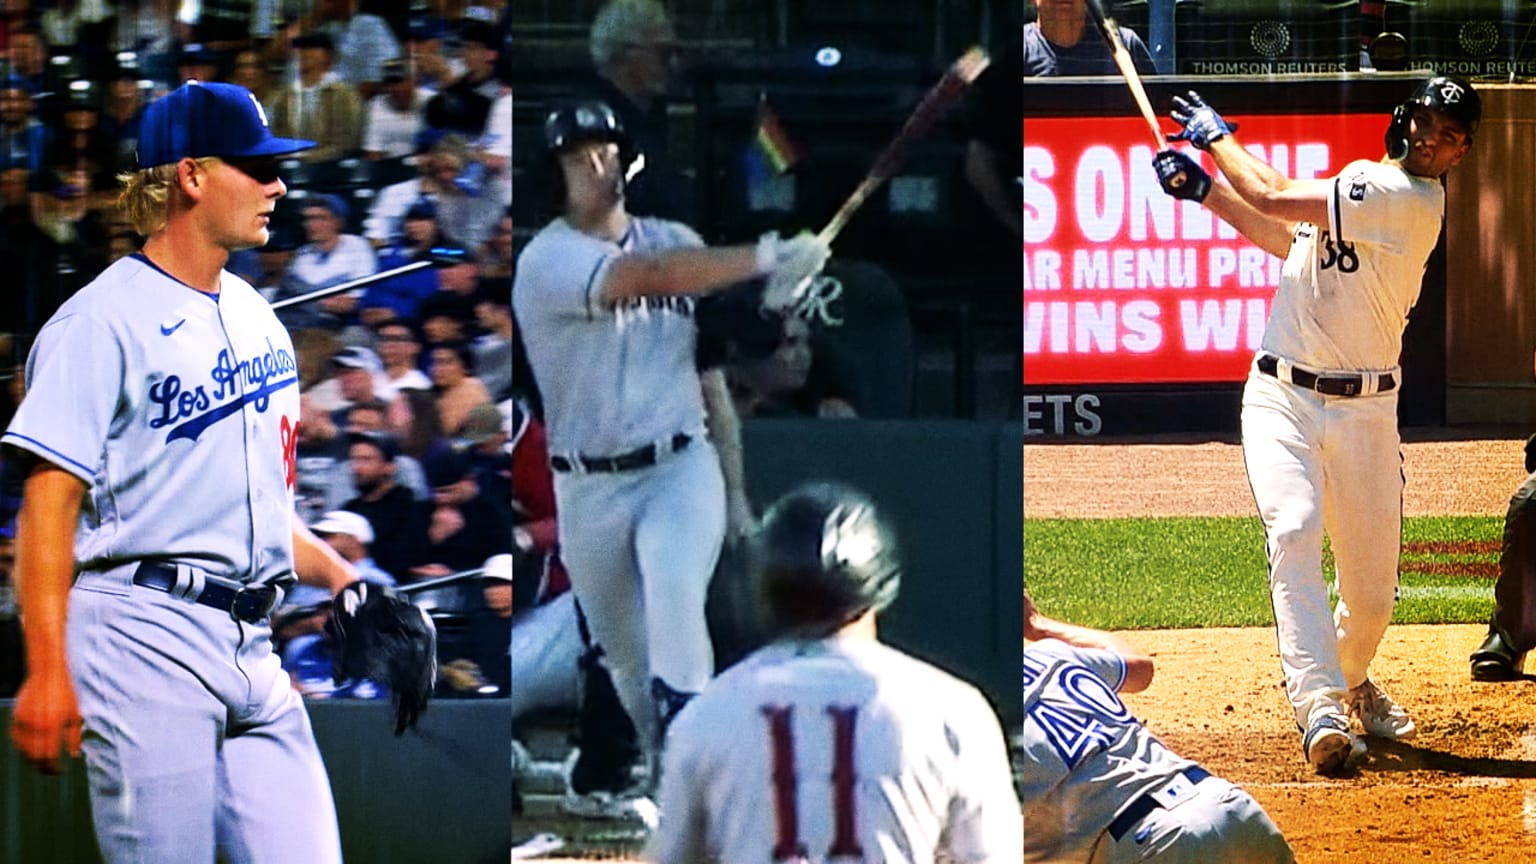 Greatest baseball swing? : r/baseball